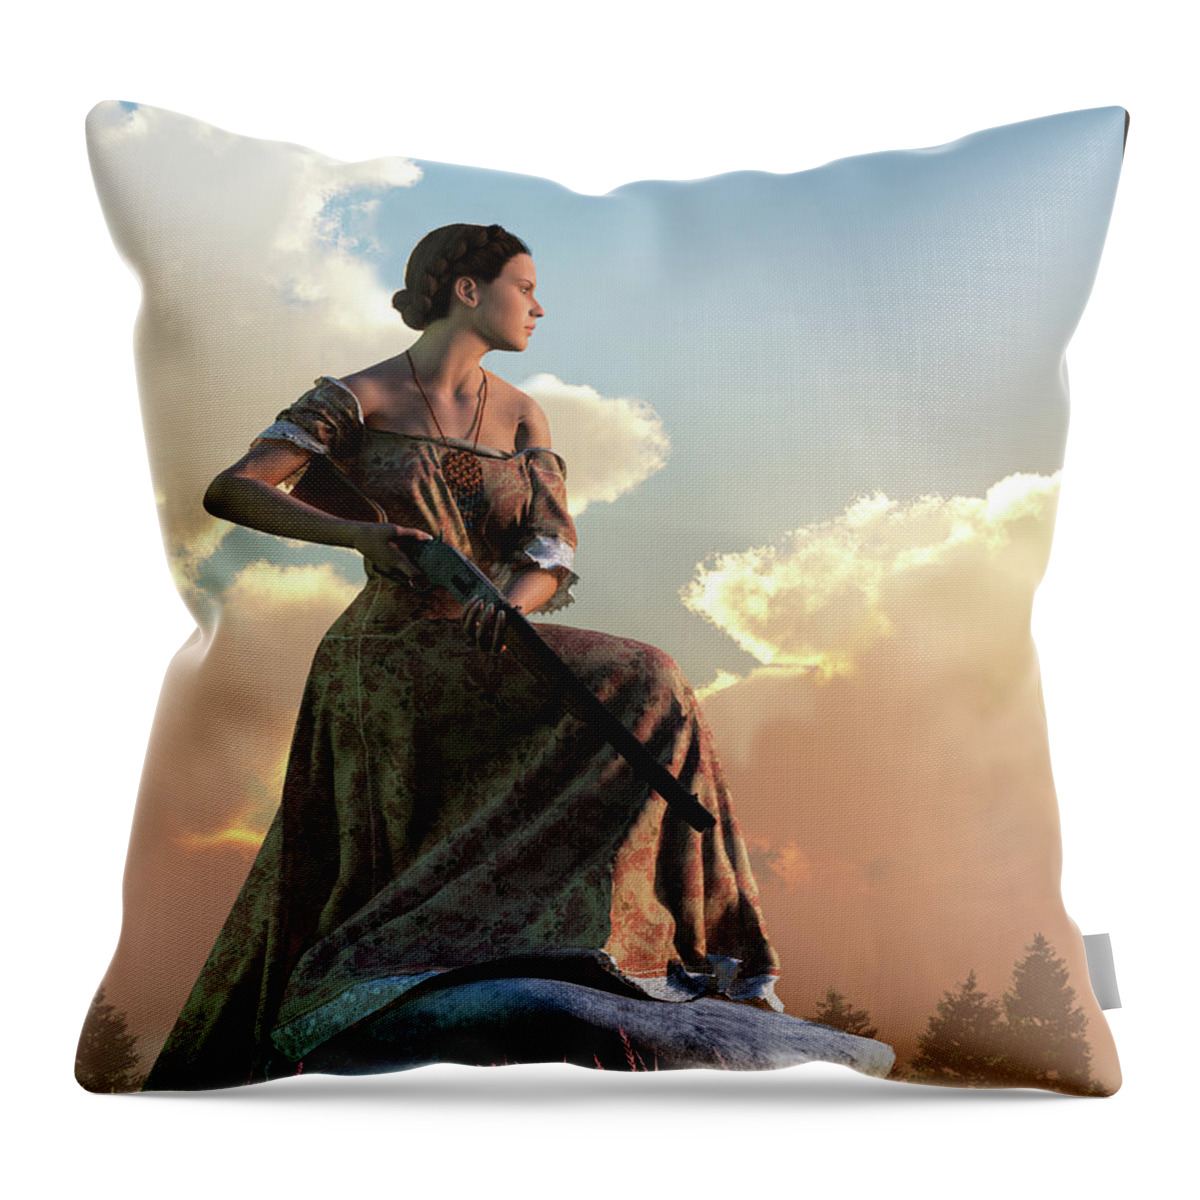 Woman Throw Pillow featuring the digital art Wild West Woman with Rifle by Daniel Eskridge